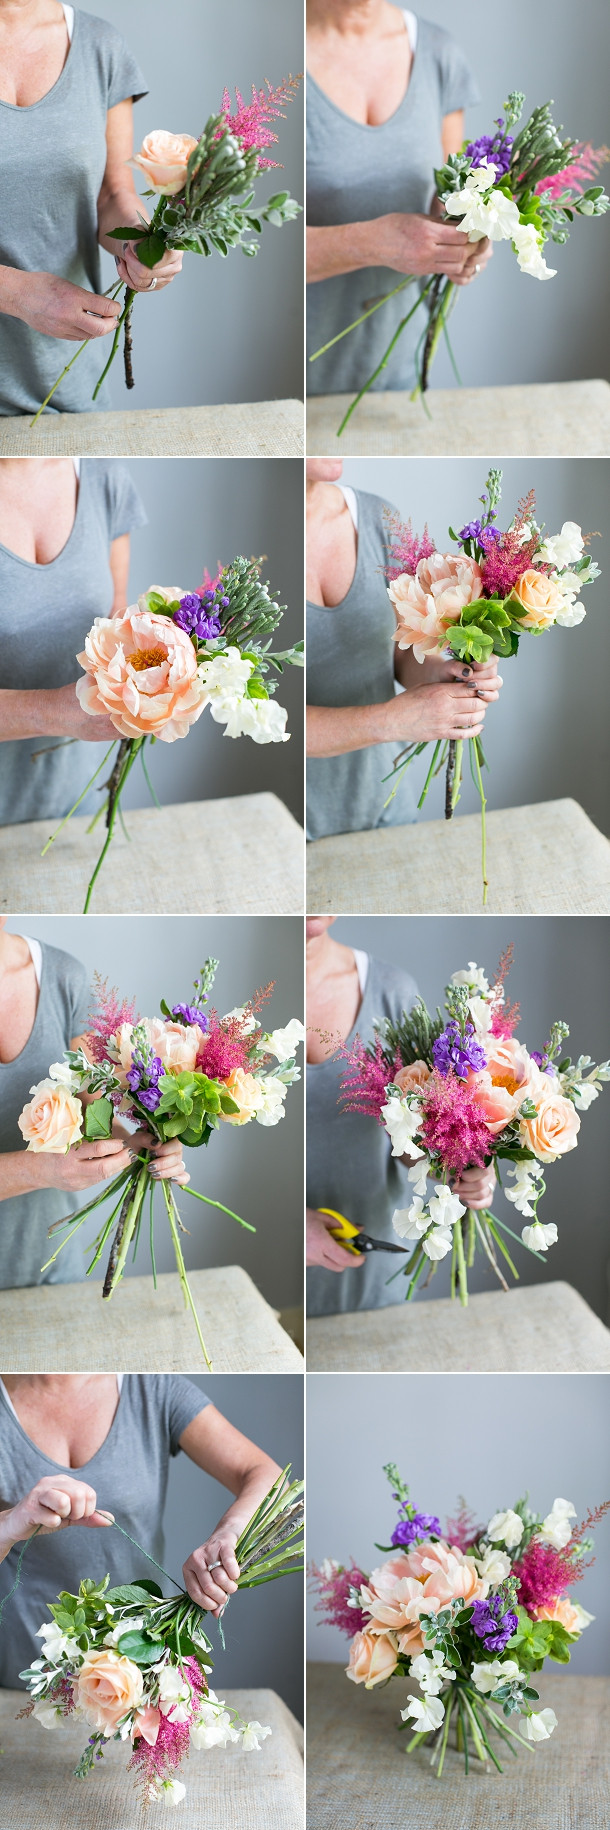 DIY Wedding Flower Arrangements
 DIY Spring bouquet tutorial with peonies